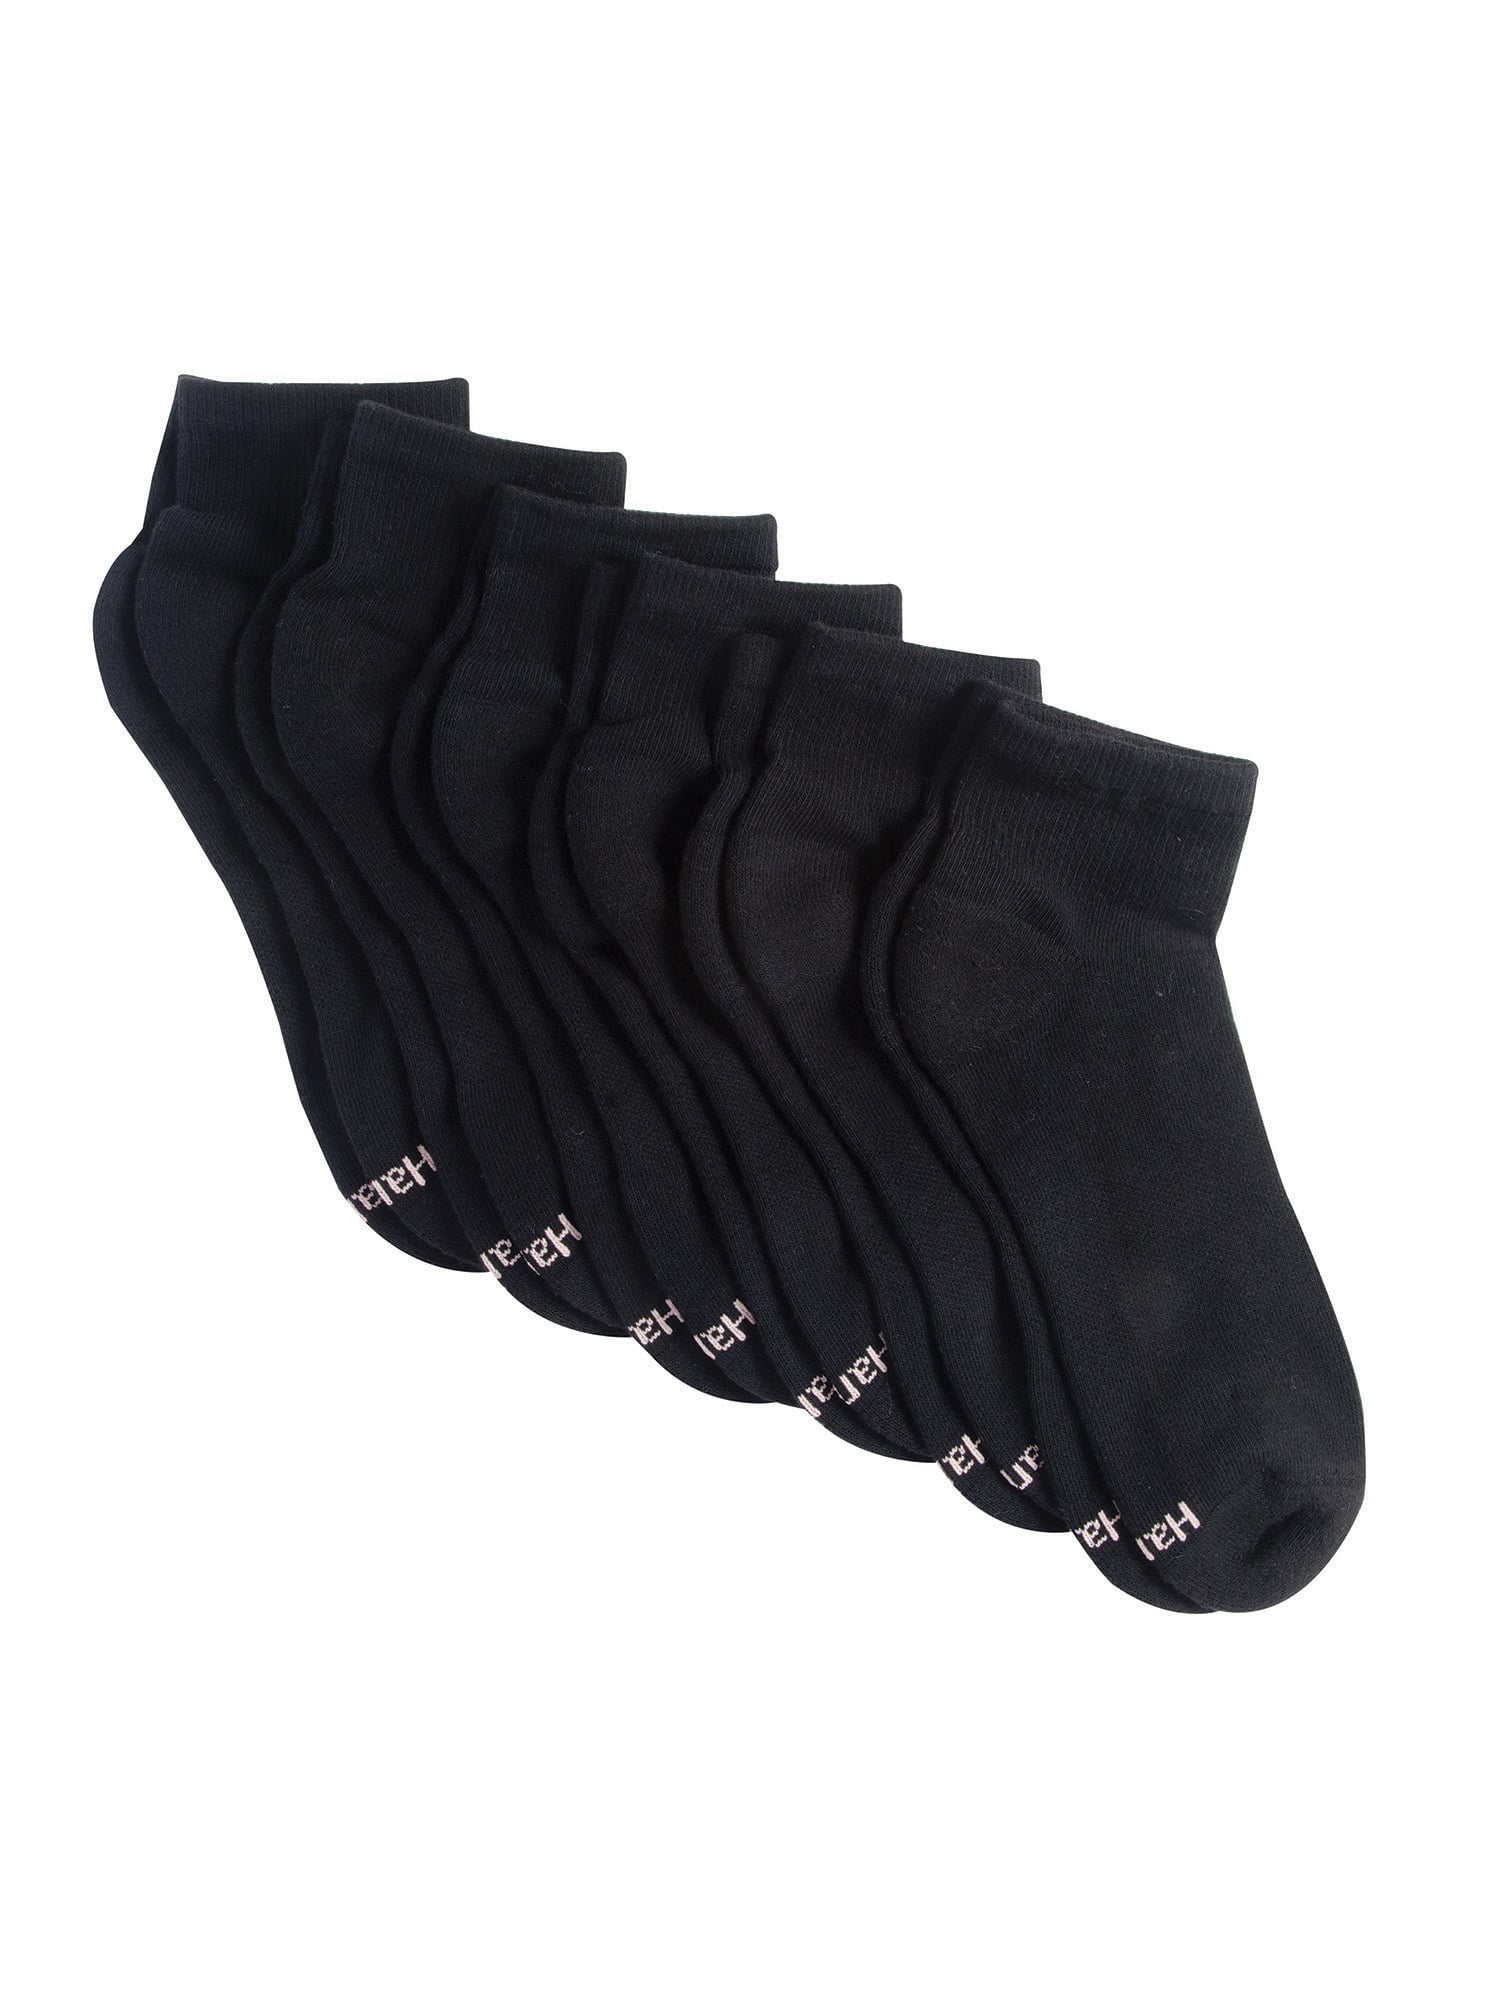 Hanes Women's Cool Comfort Sport Ankle Socks, 6 Pack - Walmart.com